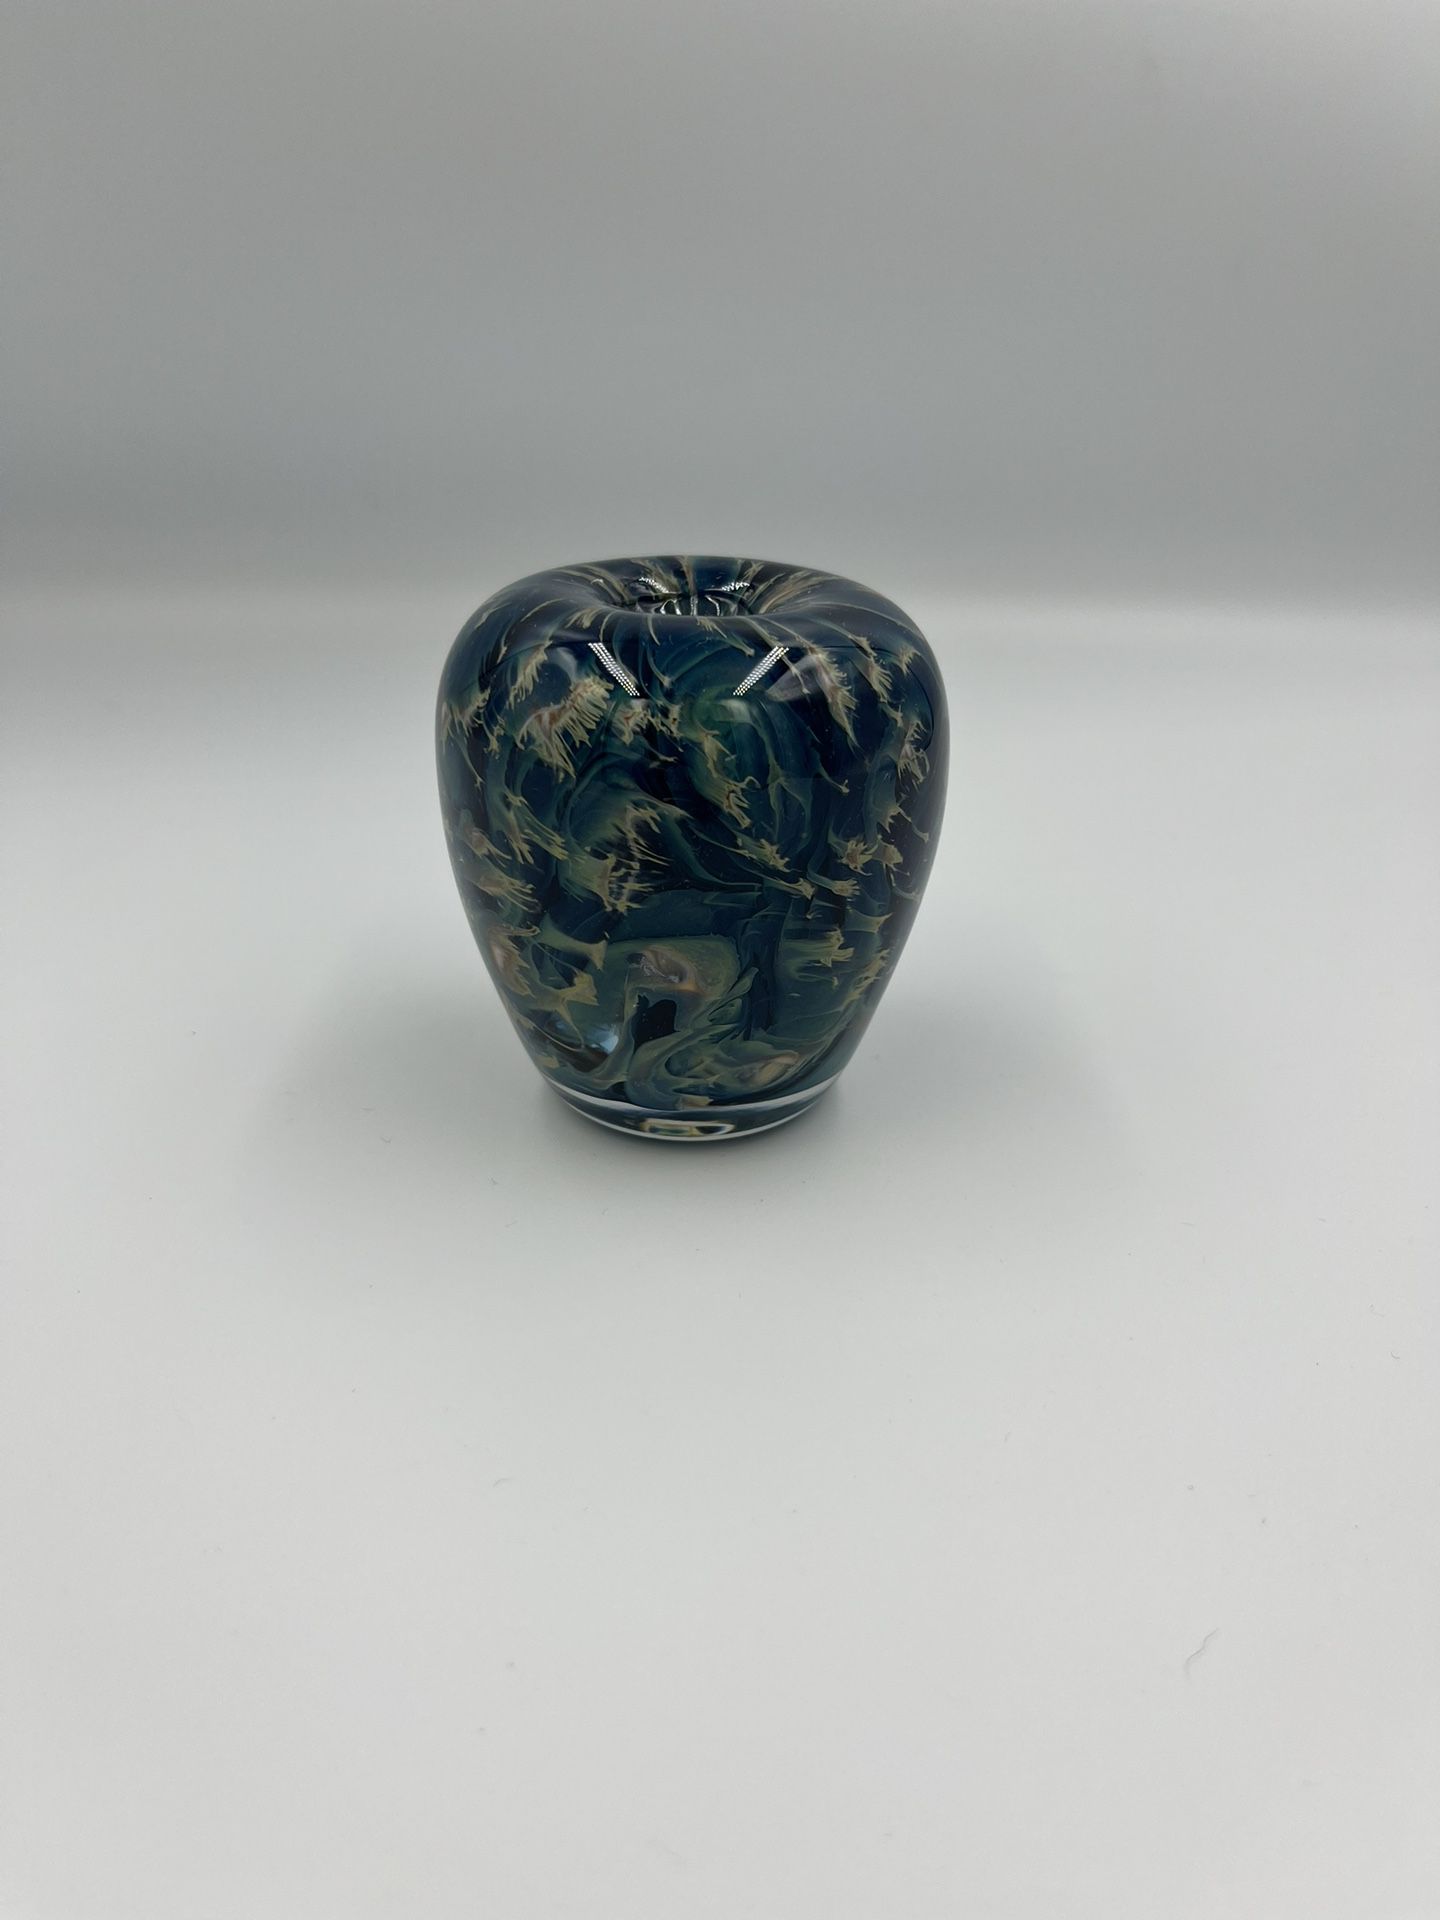 Aegean Sea Motif Classic Handblown Glass mini vase / paperweight Signed The Glass Joy 2016 